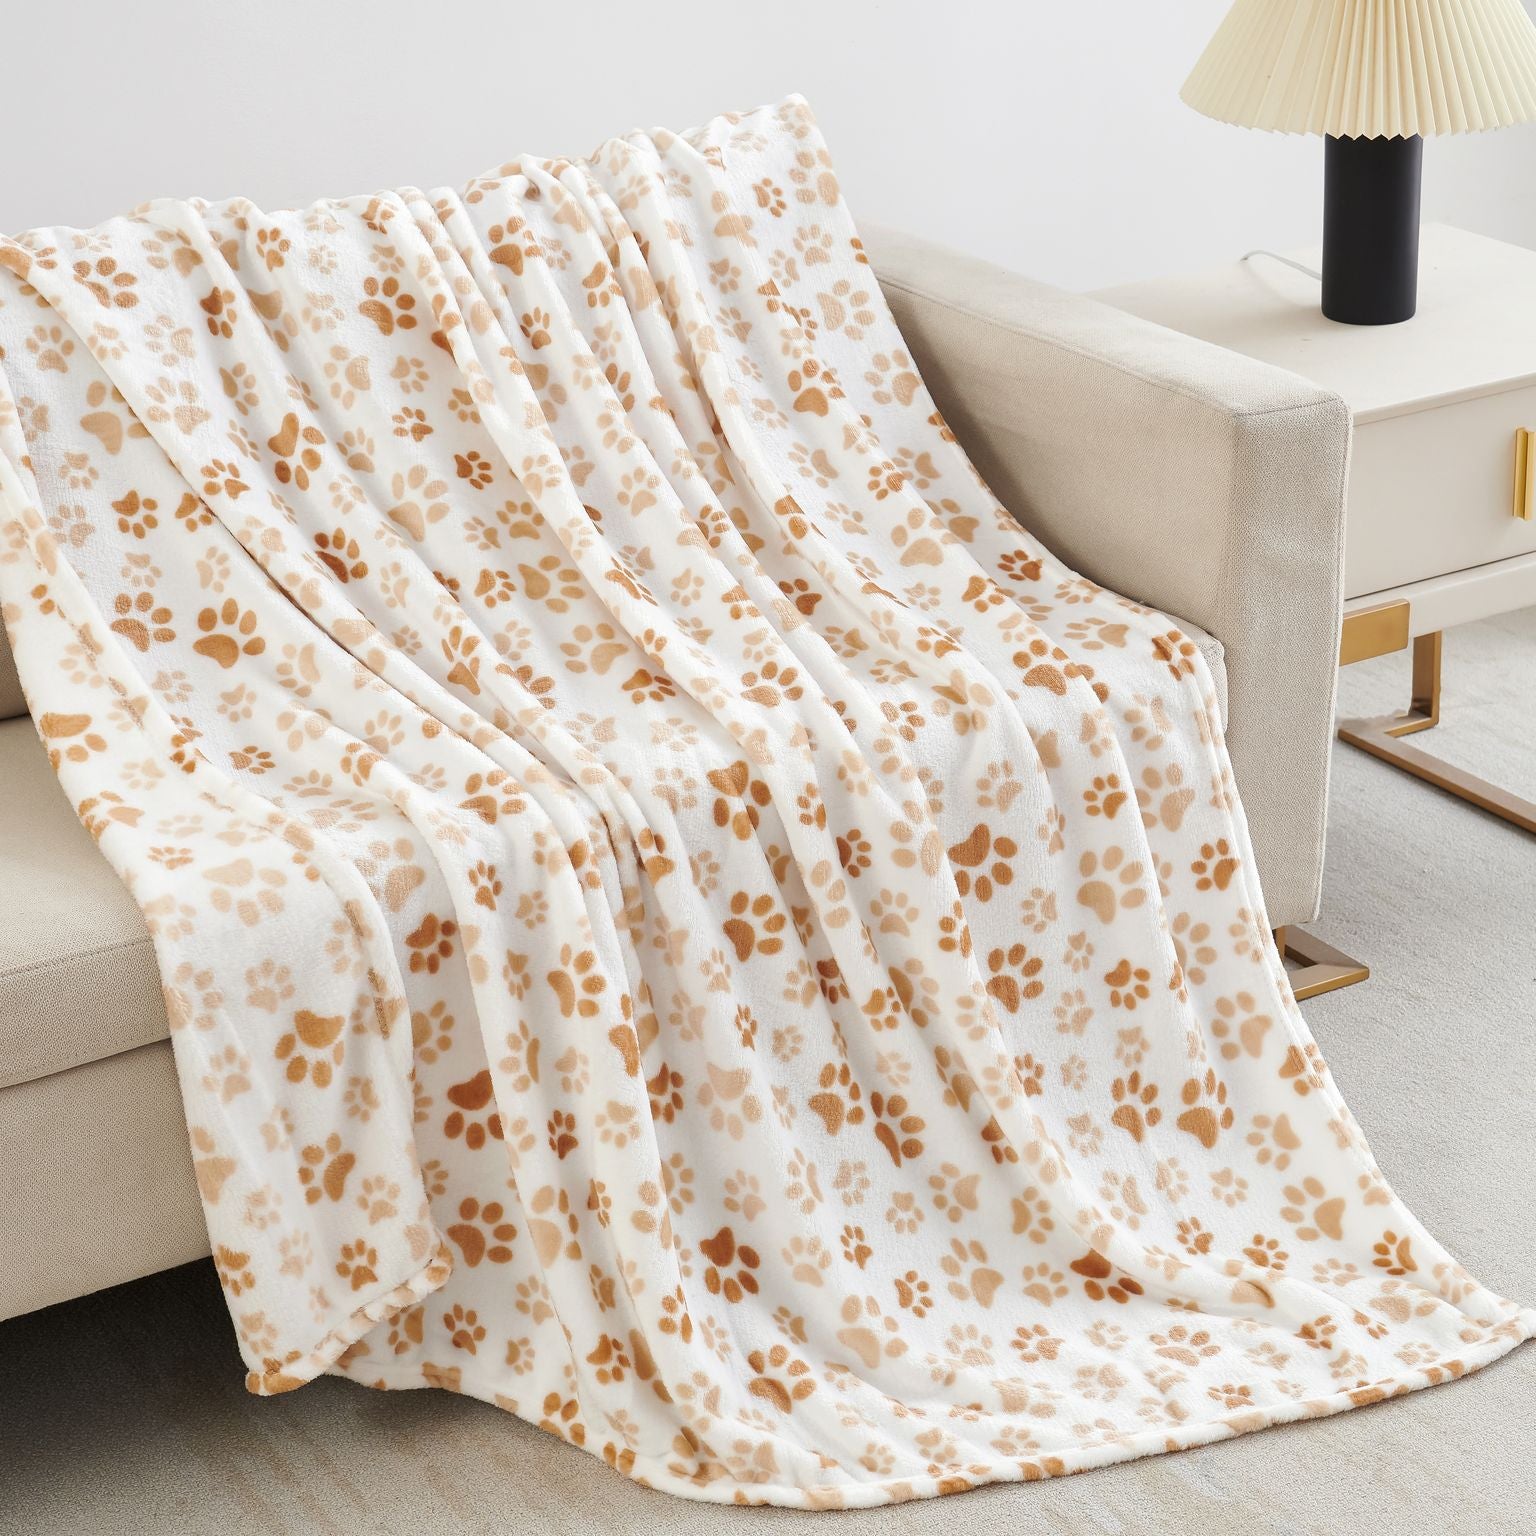 Printed Velvet Throw Blanket 50 x 60 inches Animal Paw